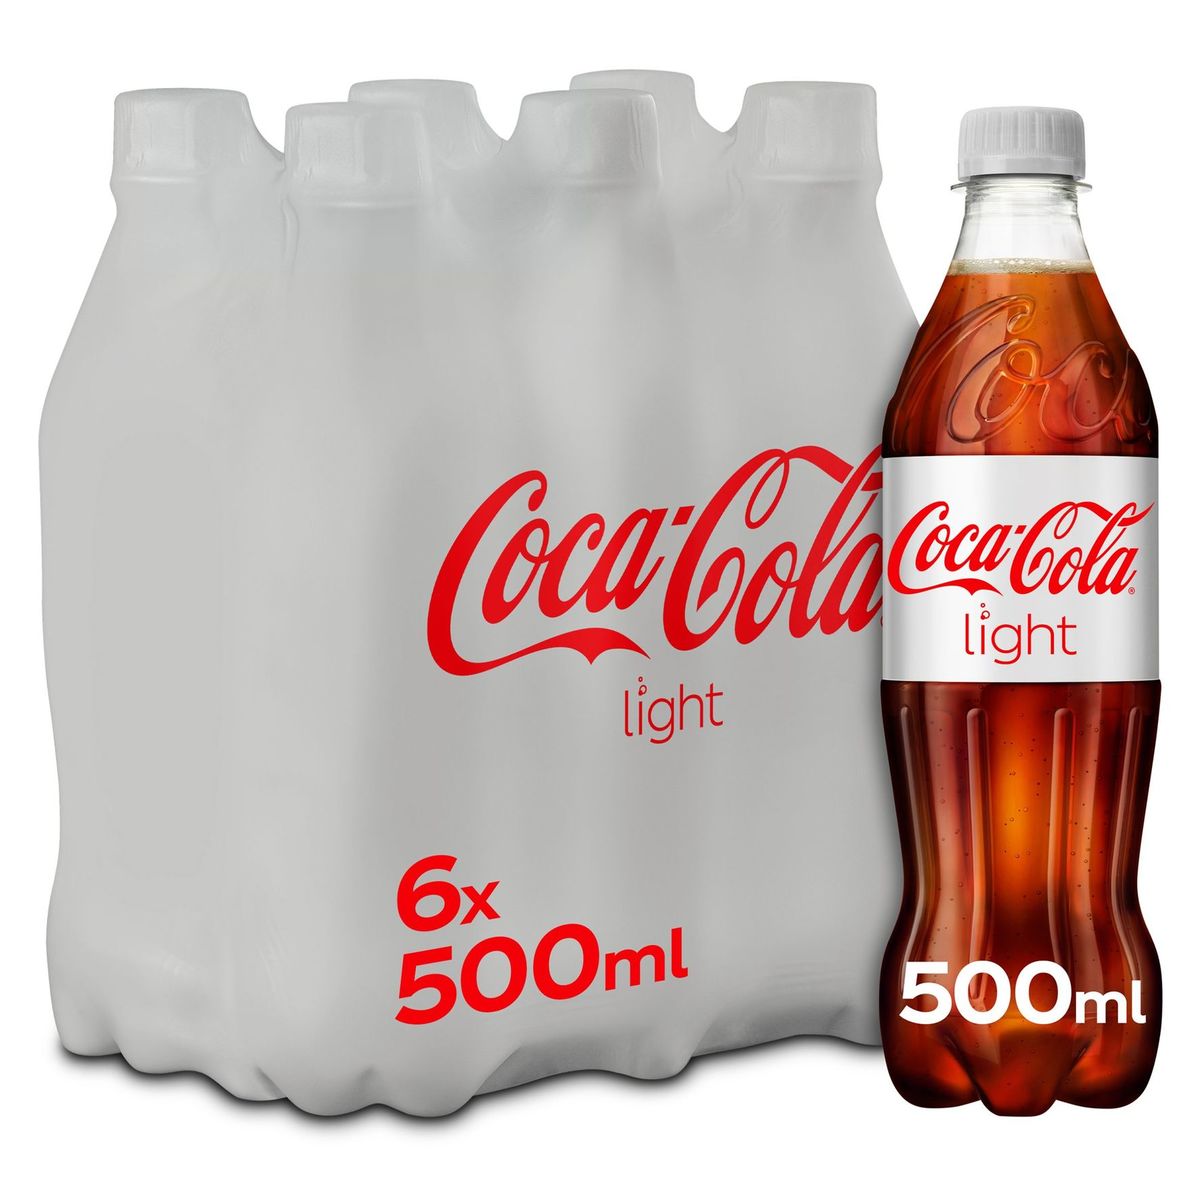 Coca-Cola Light Coke Soft drink Pet 6 x 500 ml